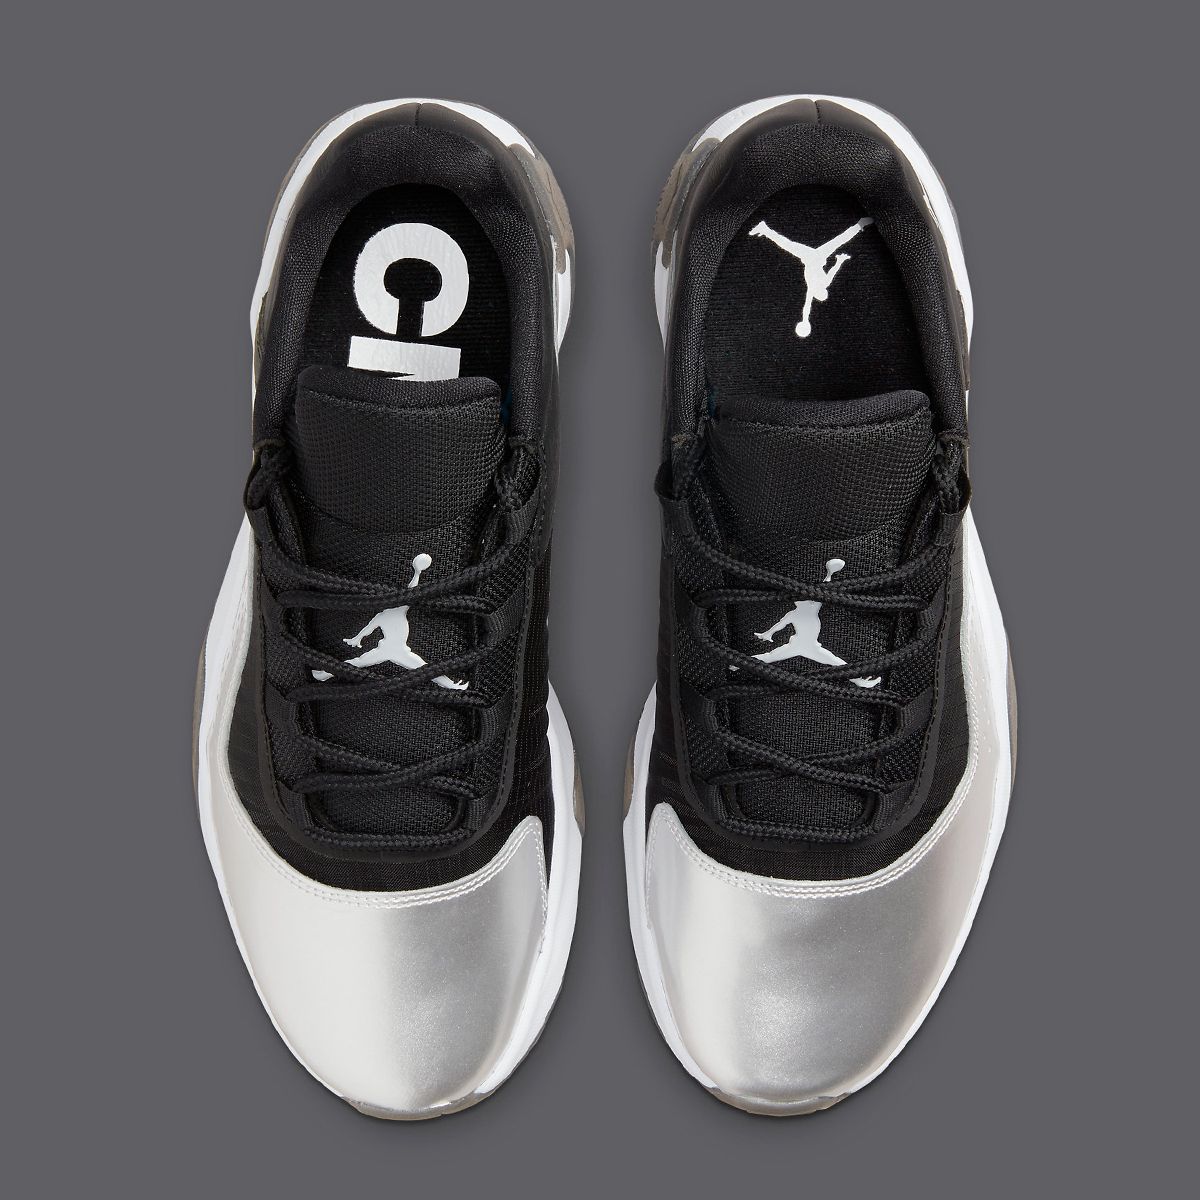 Air Jordan 11 Low CMFT “Chrome” is Coming Soon | House of Heat°